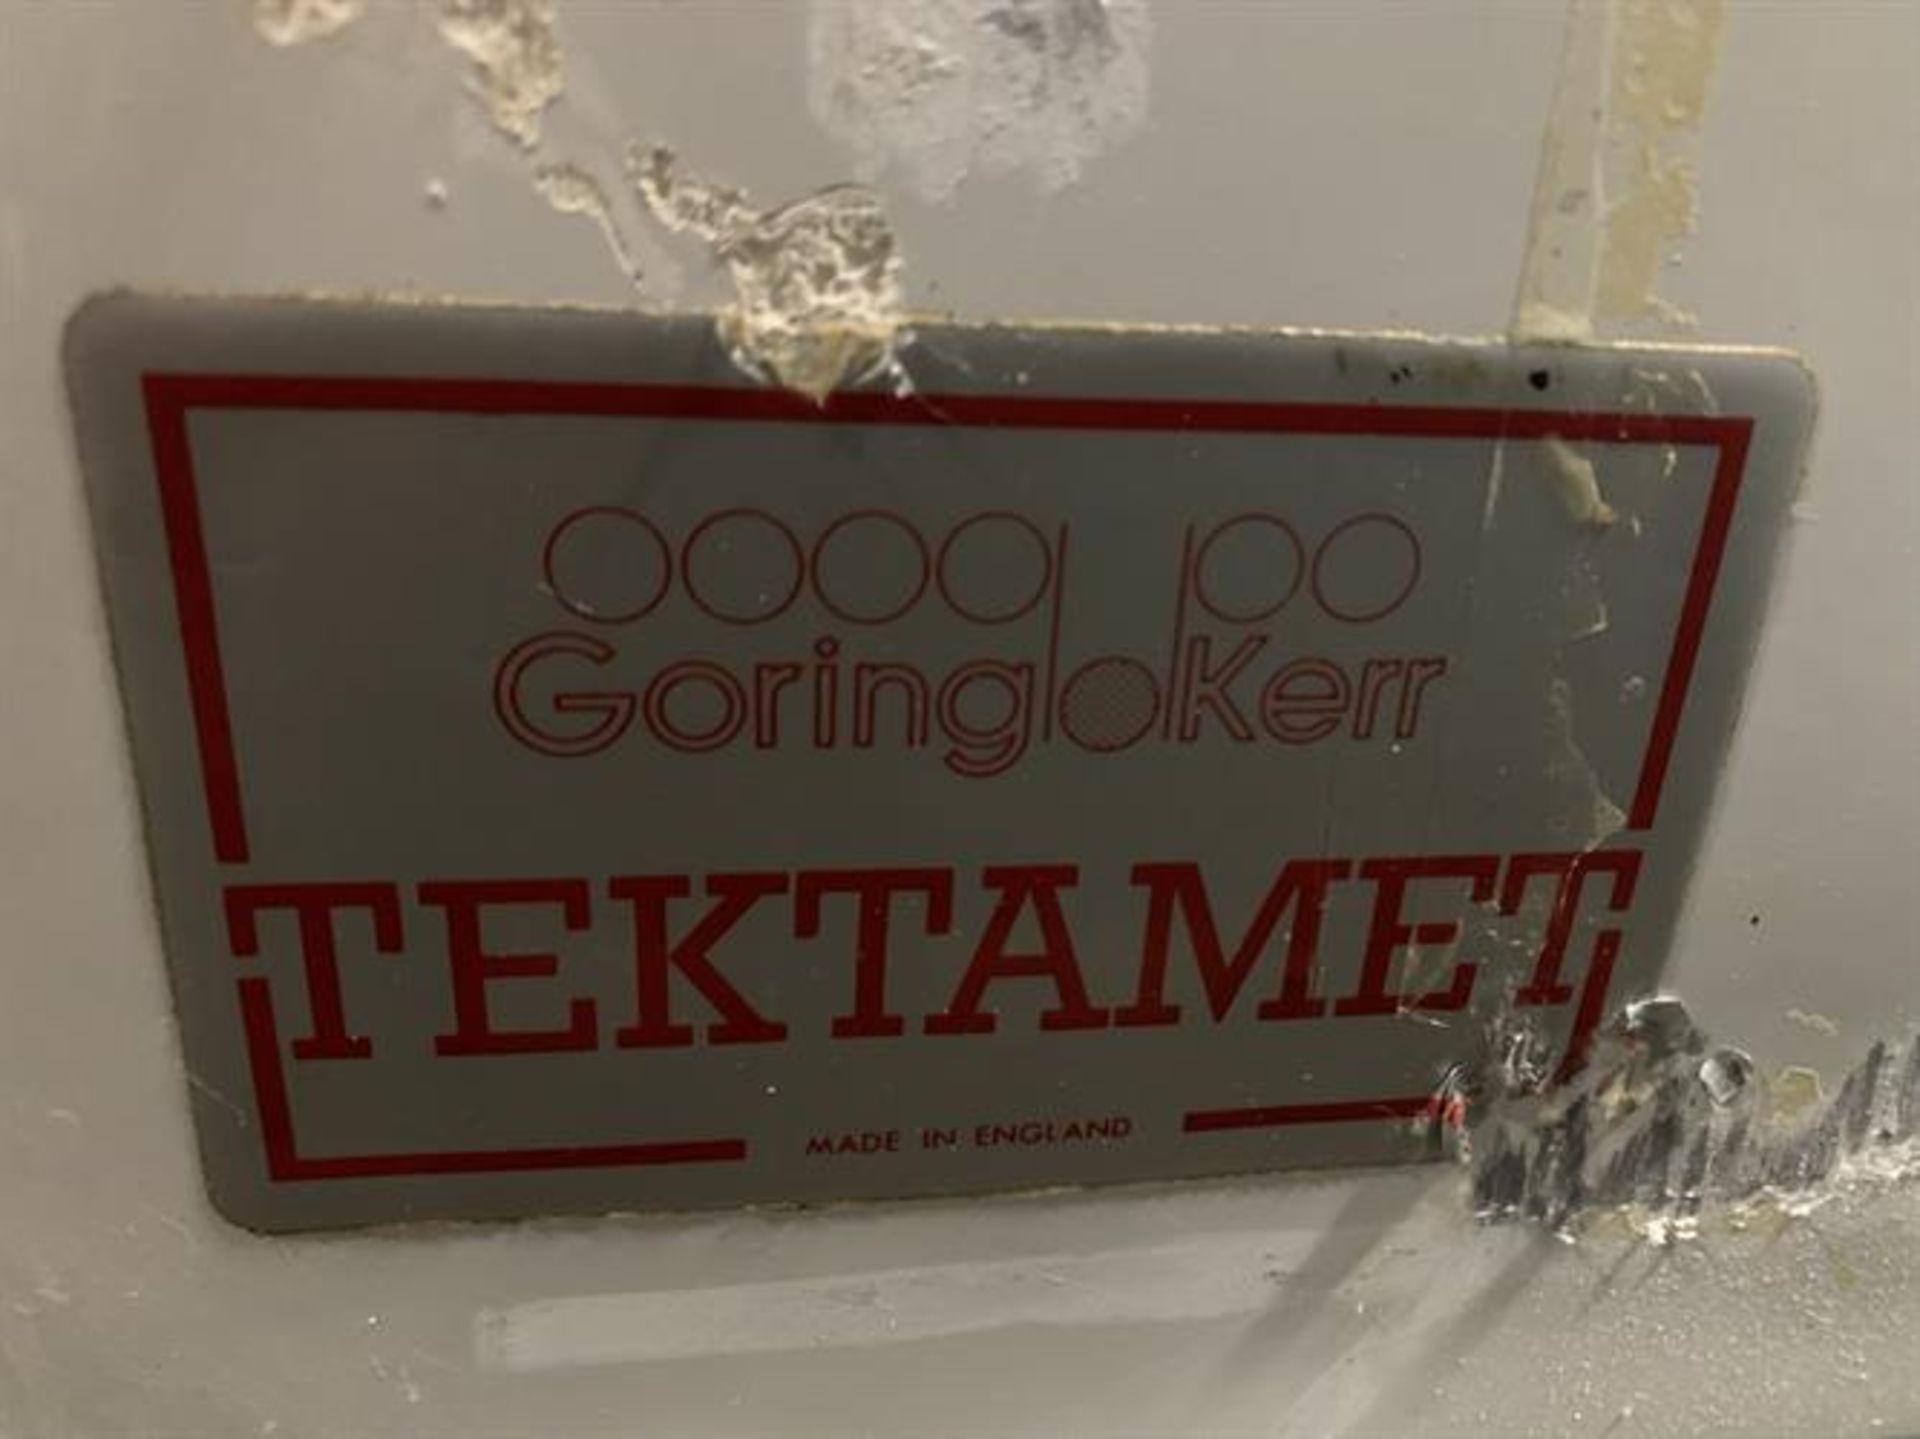 Goring Kerr Teknamet Metal Detector with 8-3/4" wide x 2-7/8" tall Opening - 120" long x 8-3/4" wide - Image 5 of 8